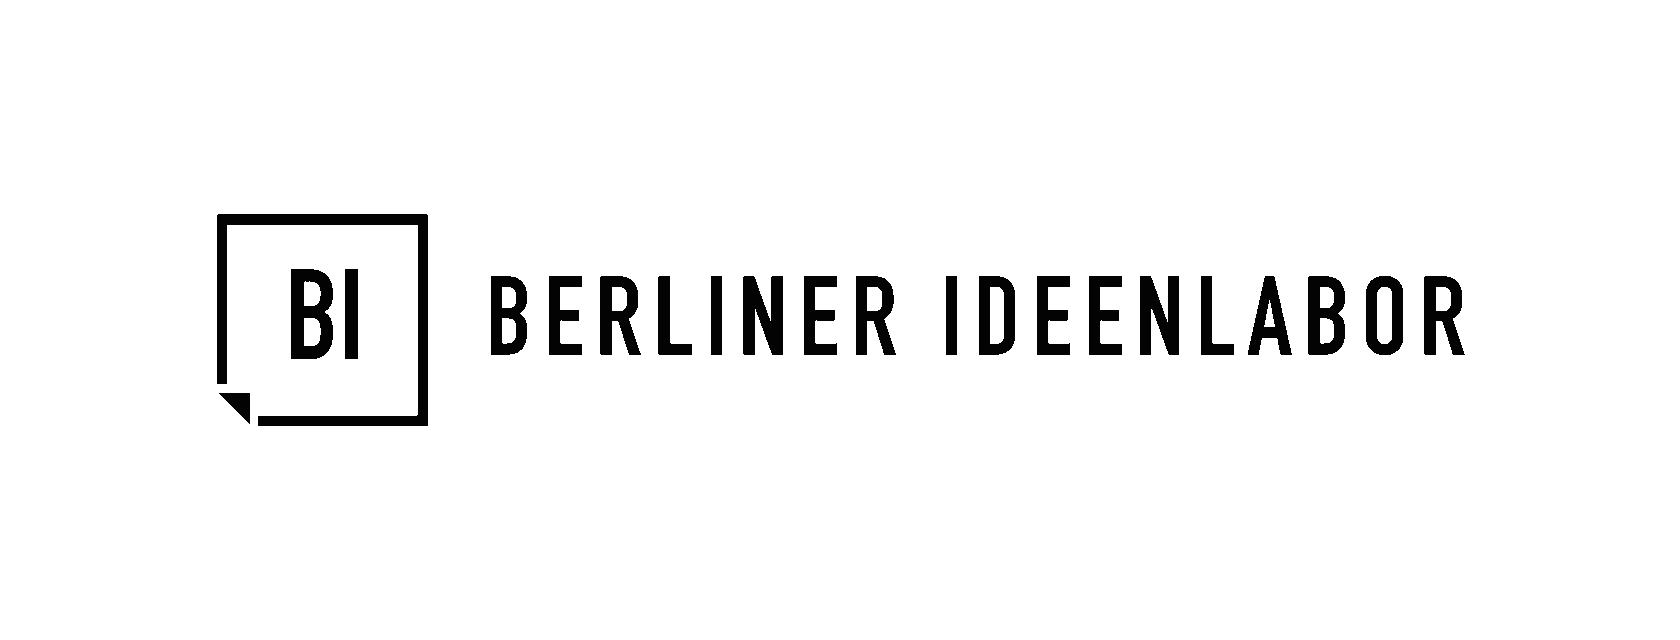 berliner-ideenlabor-logo-design-thinkit